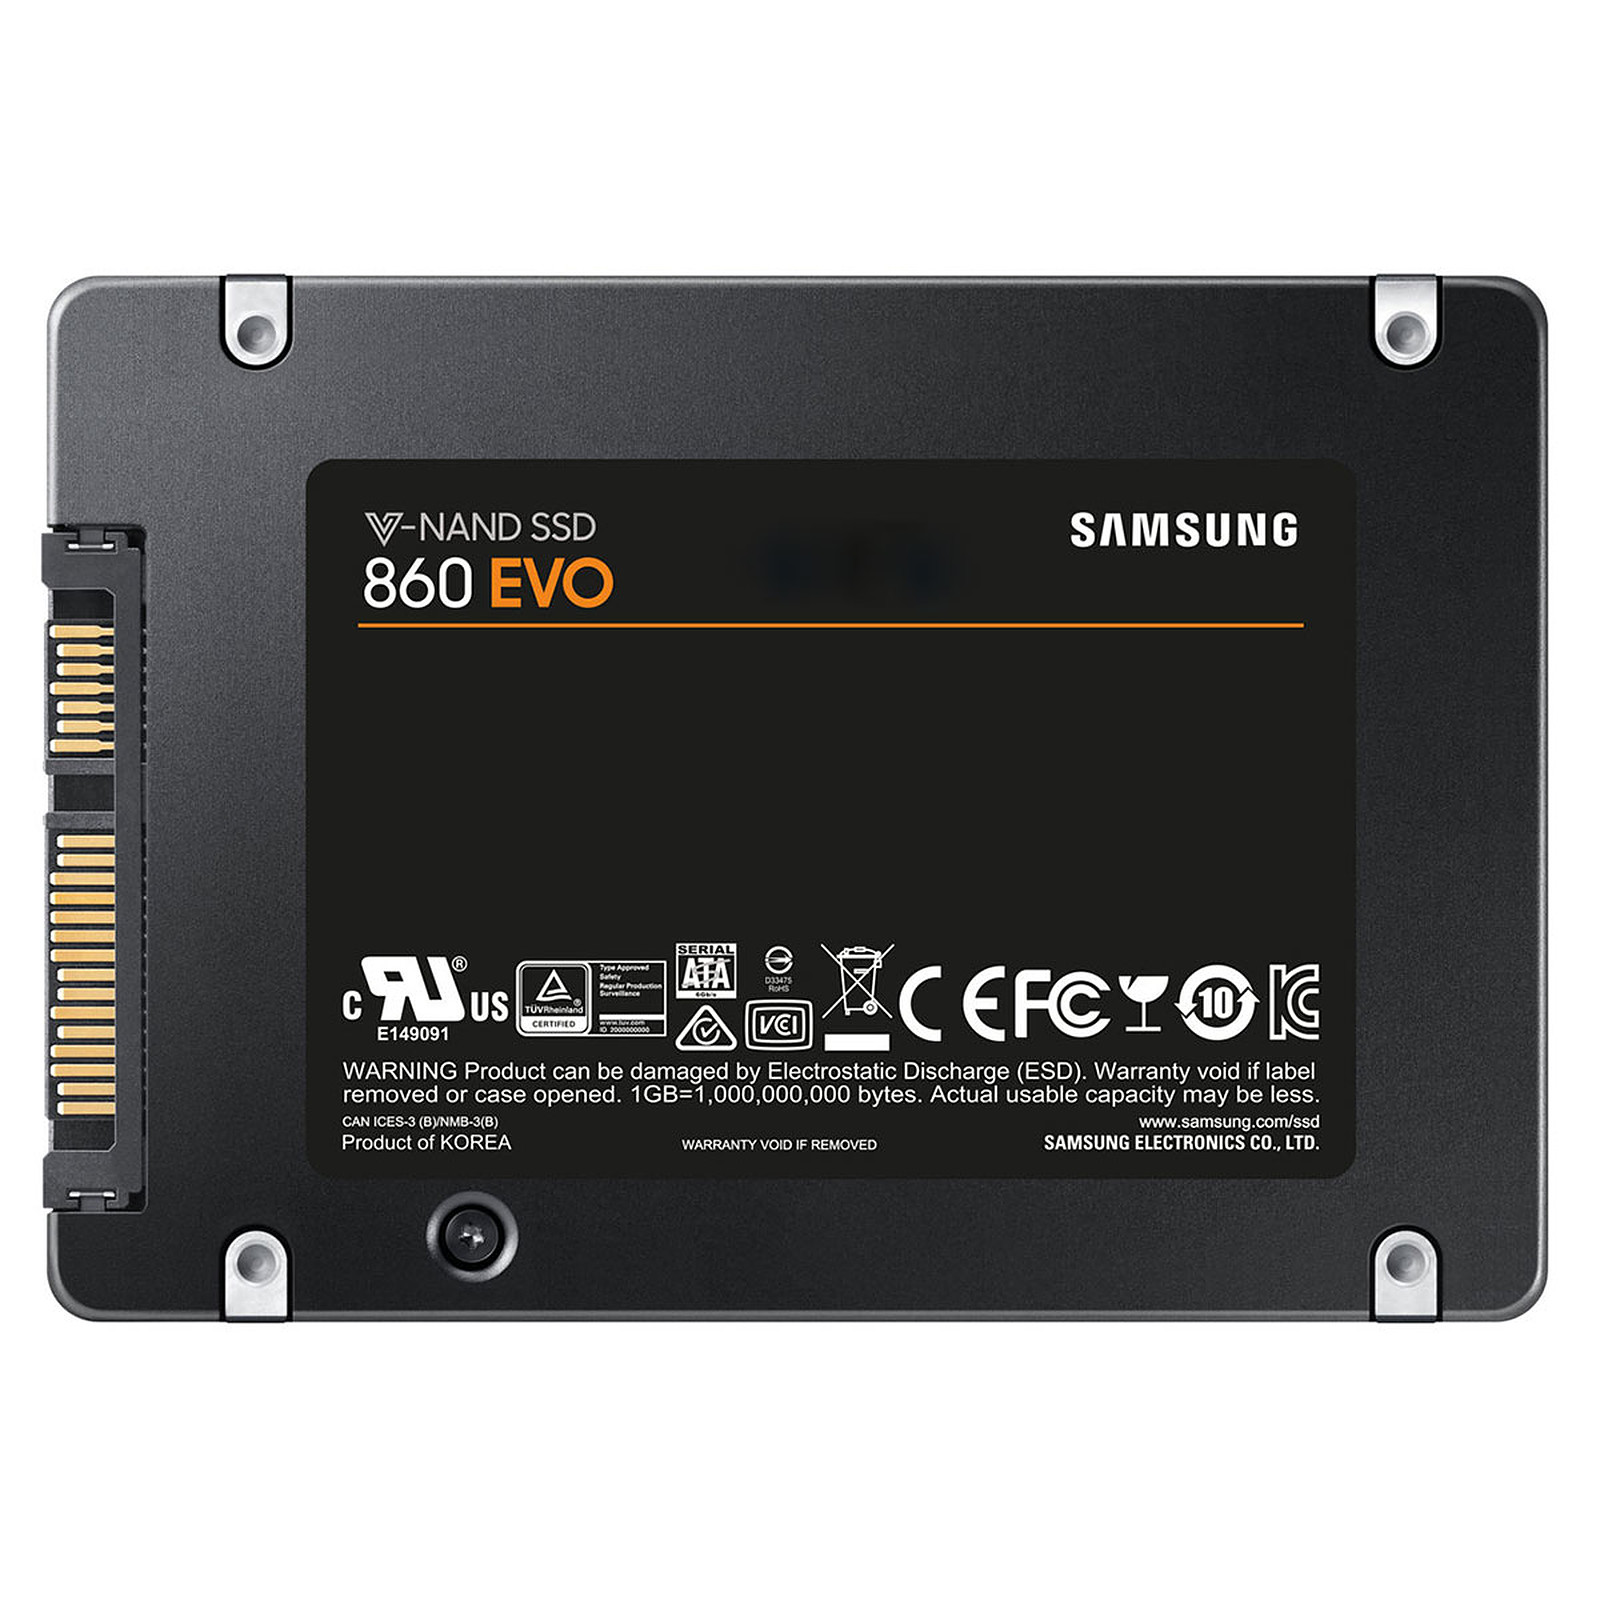 Samsung Disque dur SSD 500 Go EVO 870 - SATA 2.5